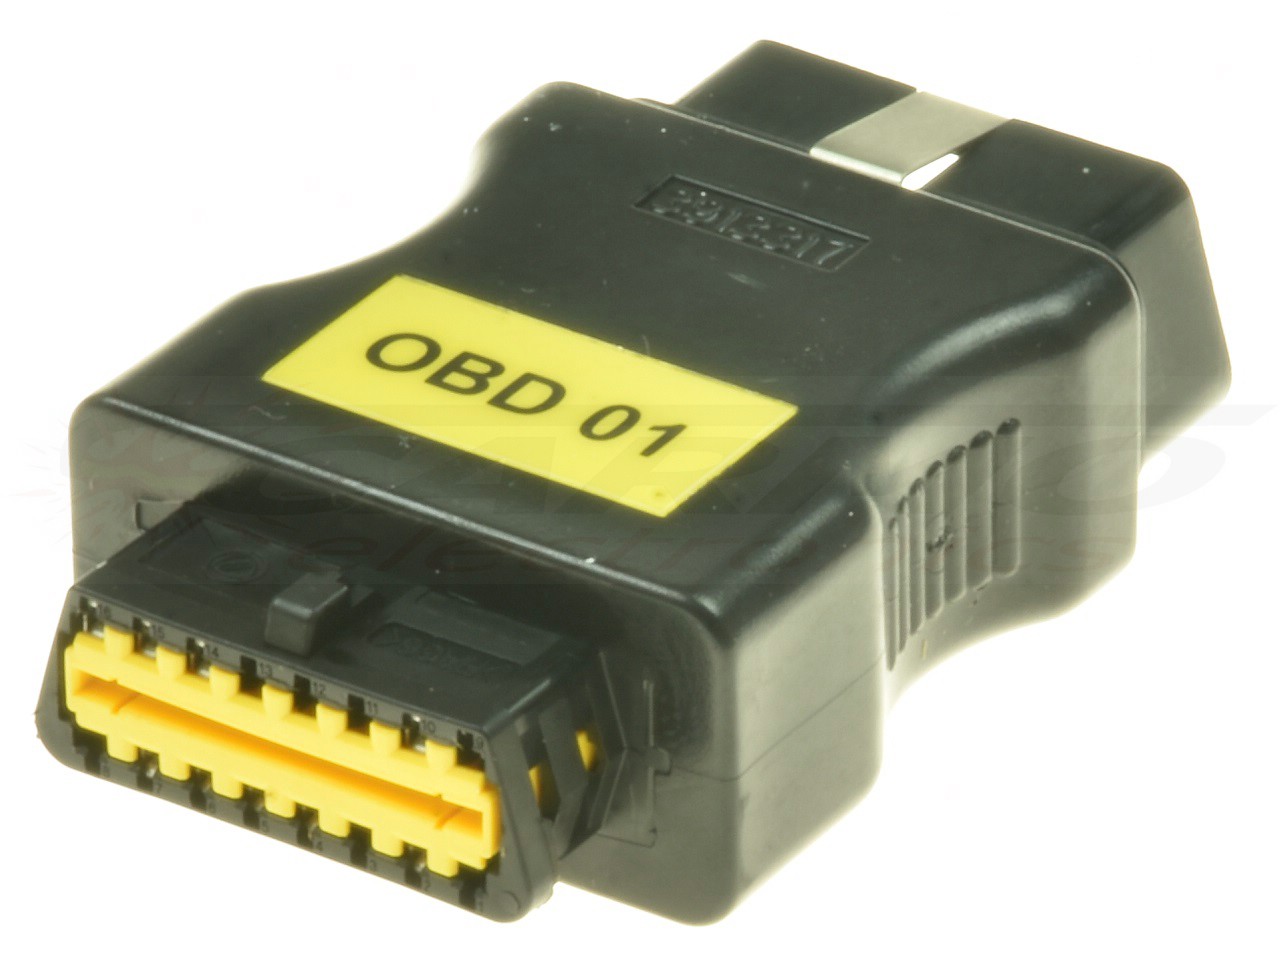 OBD01 Motorcycle OBD adapter for diagnosing CFMOTO motorbikes and quads TEXA-3913317 - Clique na Imagem para Fechar